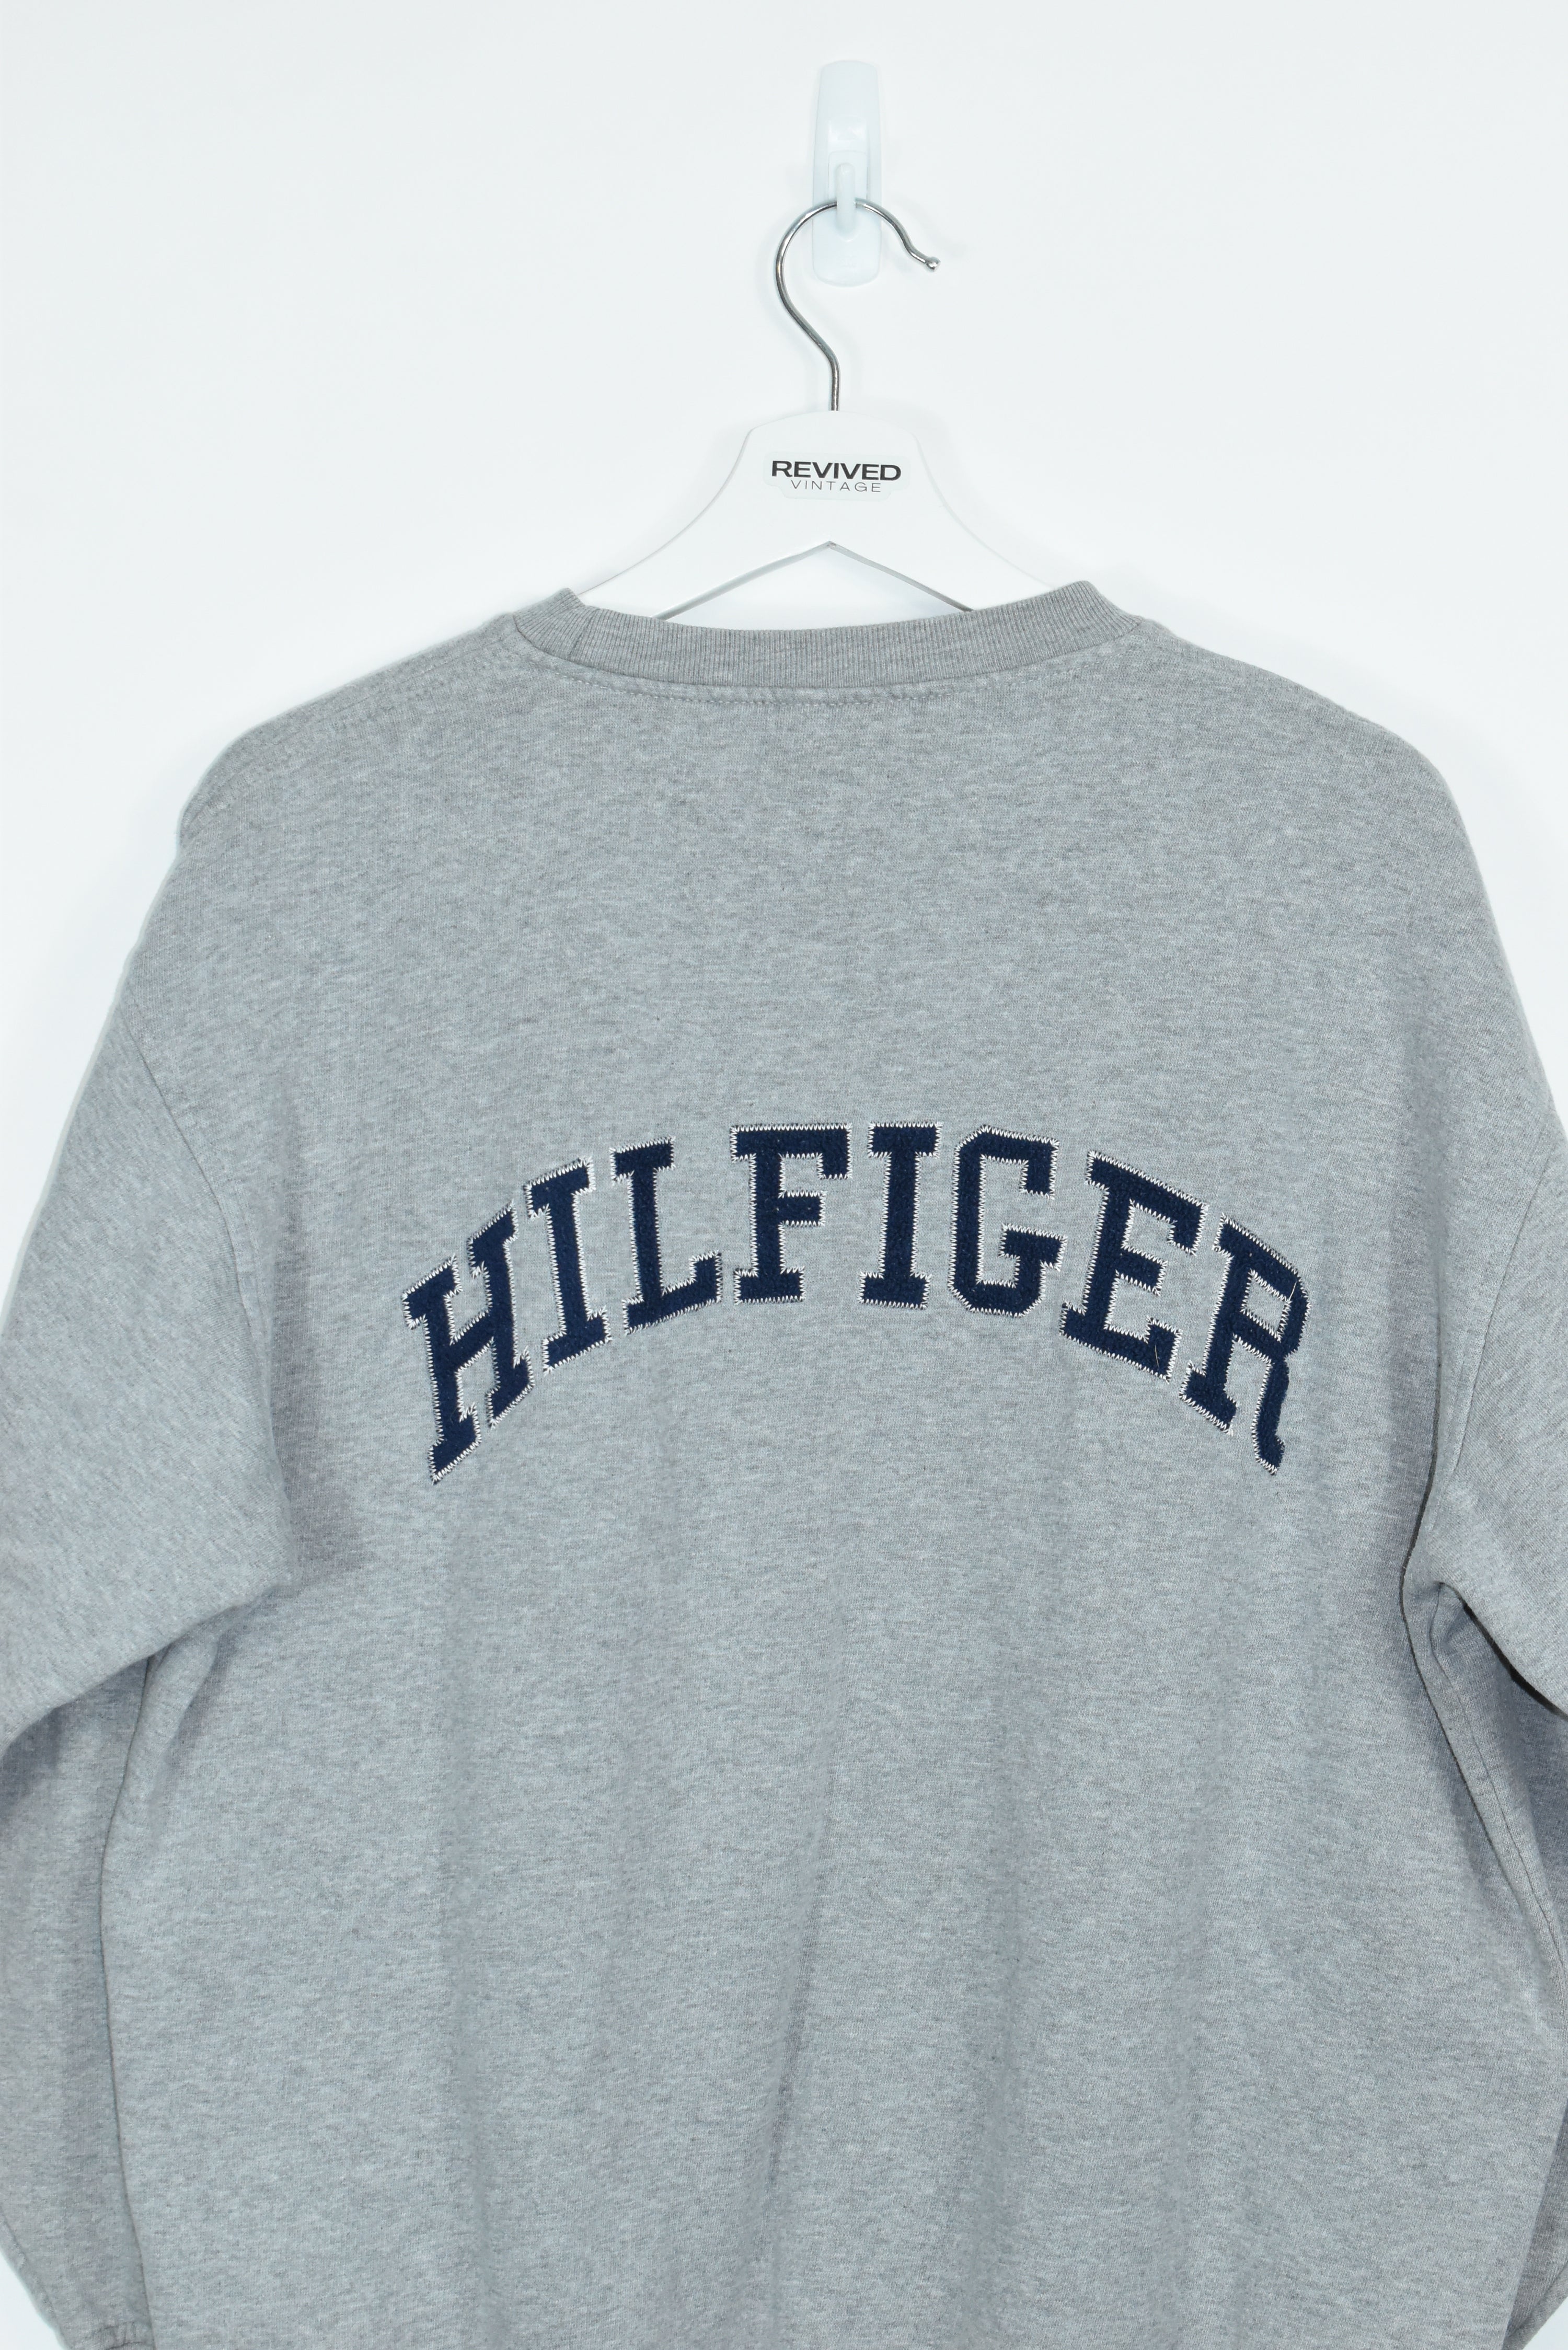 Vintage Tommy Hilfiger Embroidery Double-Sided Sweatshirt MEDIUM